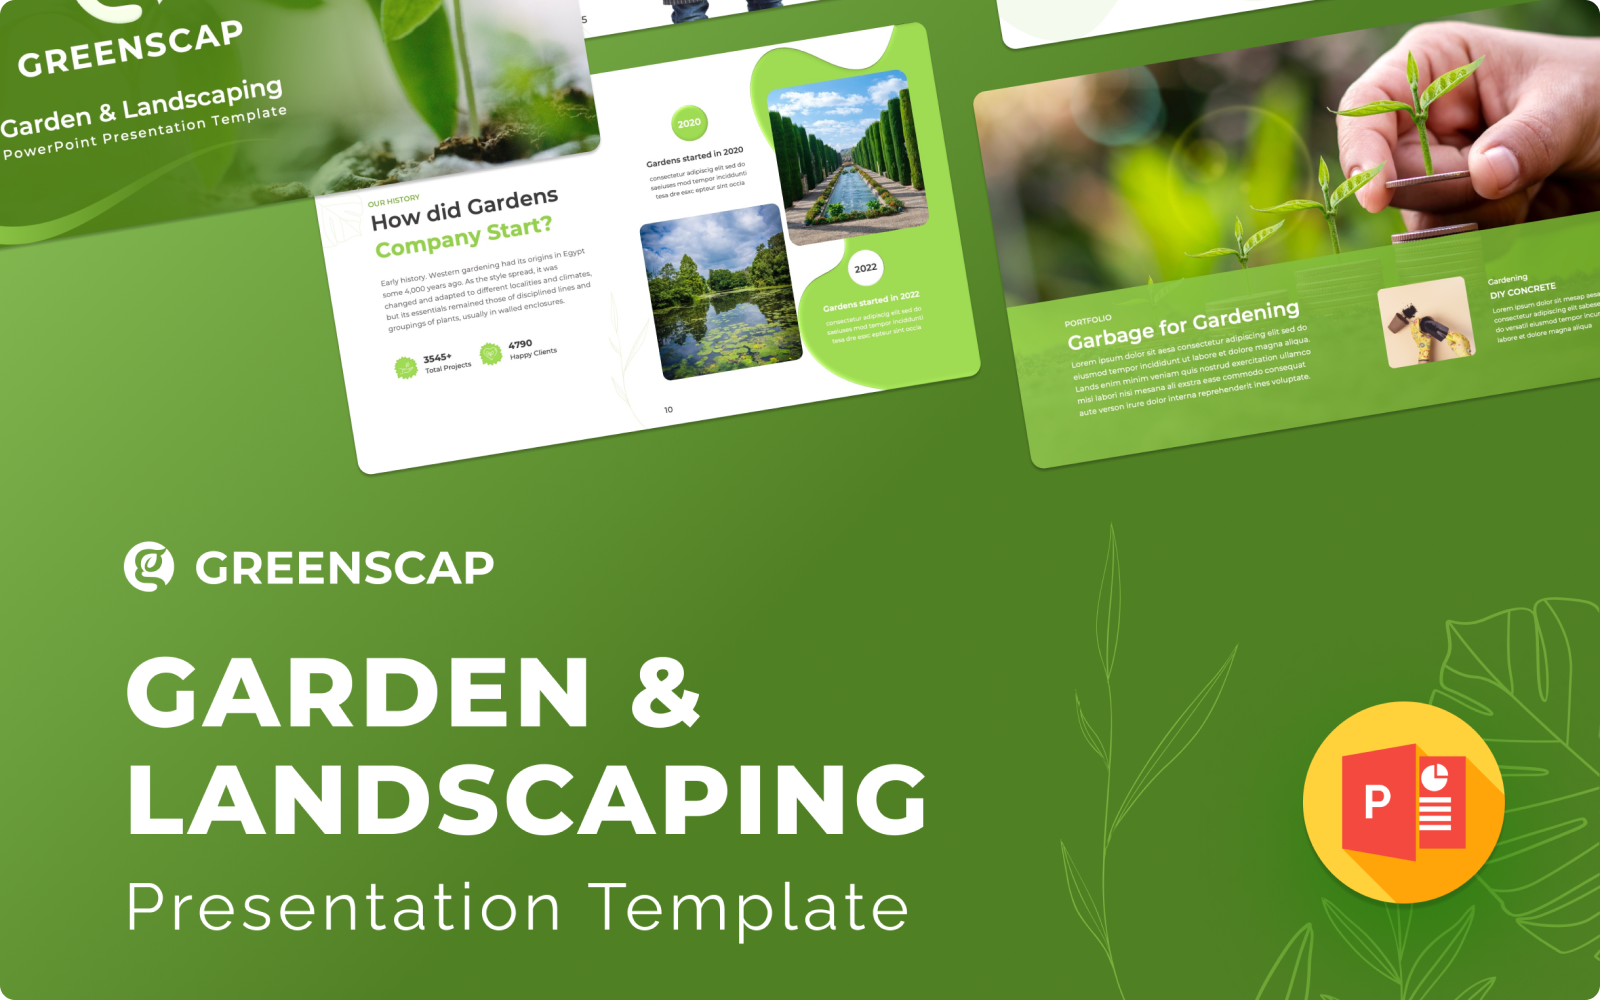 Greenscap – Garden & Landscaping PowerPoint Presentation Template